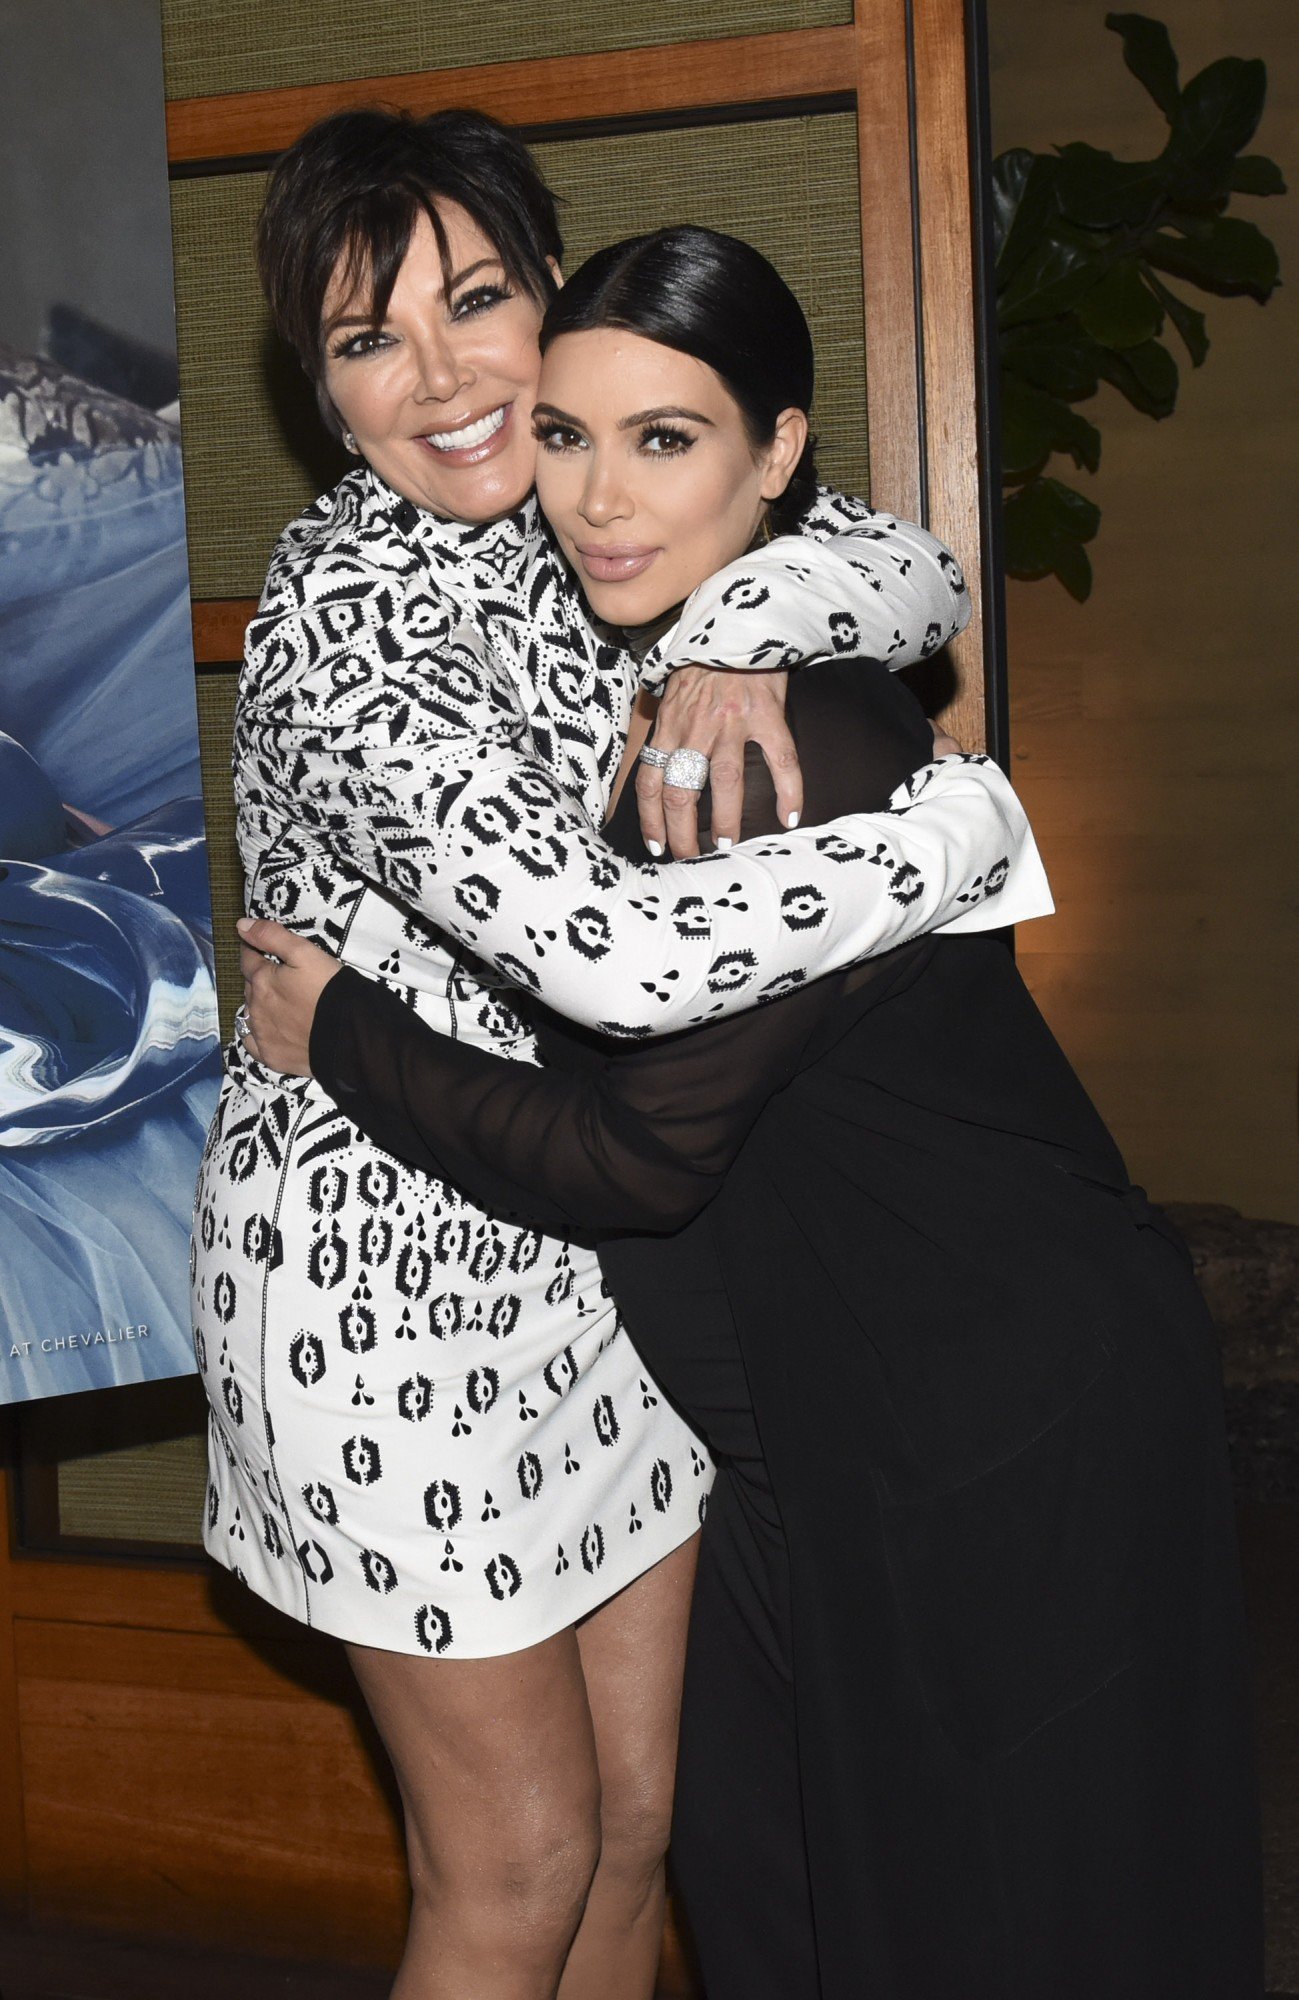 MALIBU, CA - AUGUST 24: Kris Jenner and Kim Kardashian West attend Westime Celebrates Kris Jenner's Haute Living Cover at Nobu Malibu on August 24, 2015 in Malibu, California. (Photo by Vivien Killilea/Getty Images for Haute Living)